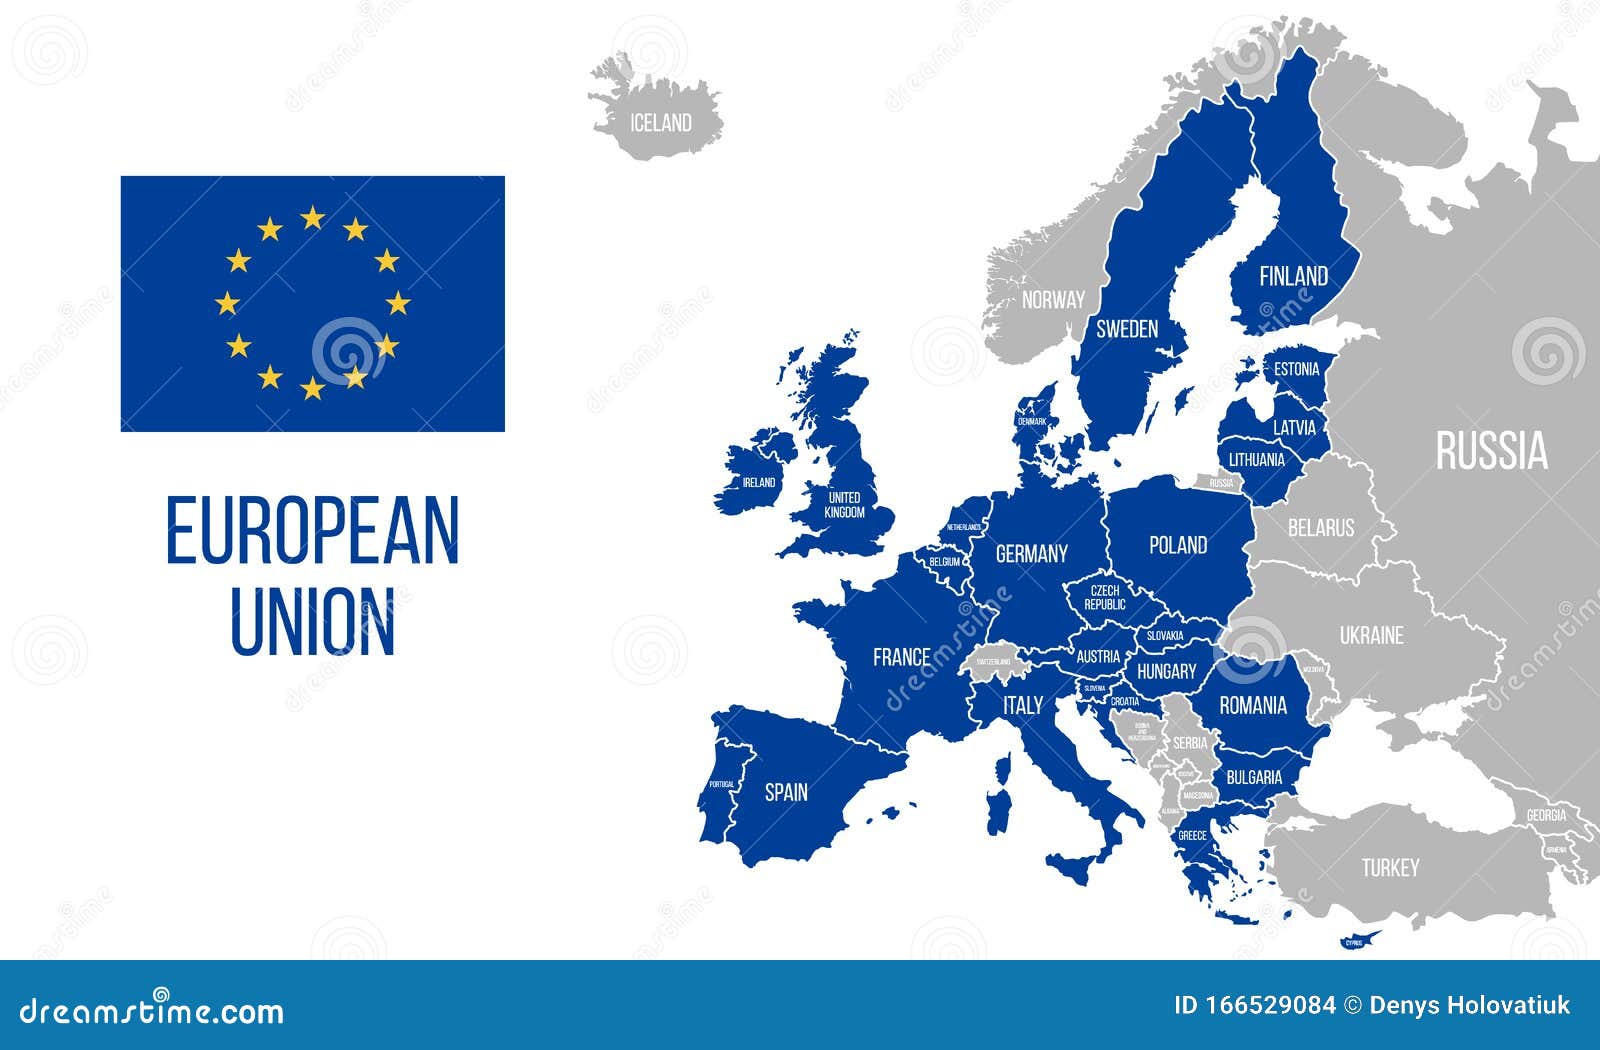 Eu что за страна. Карта ЕС. Карта Евросоюза. Европейский Союз карта.